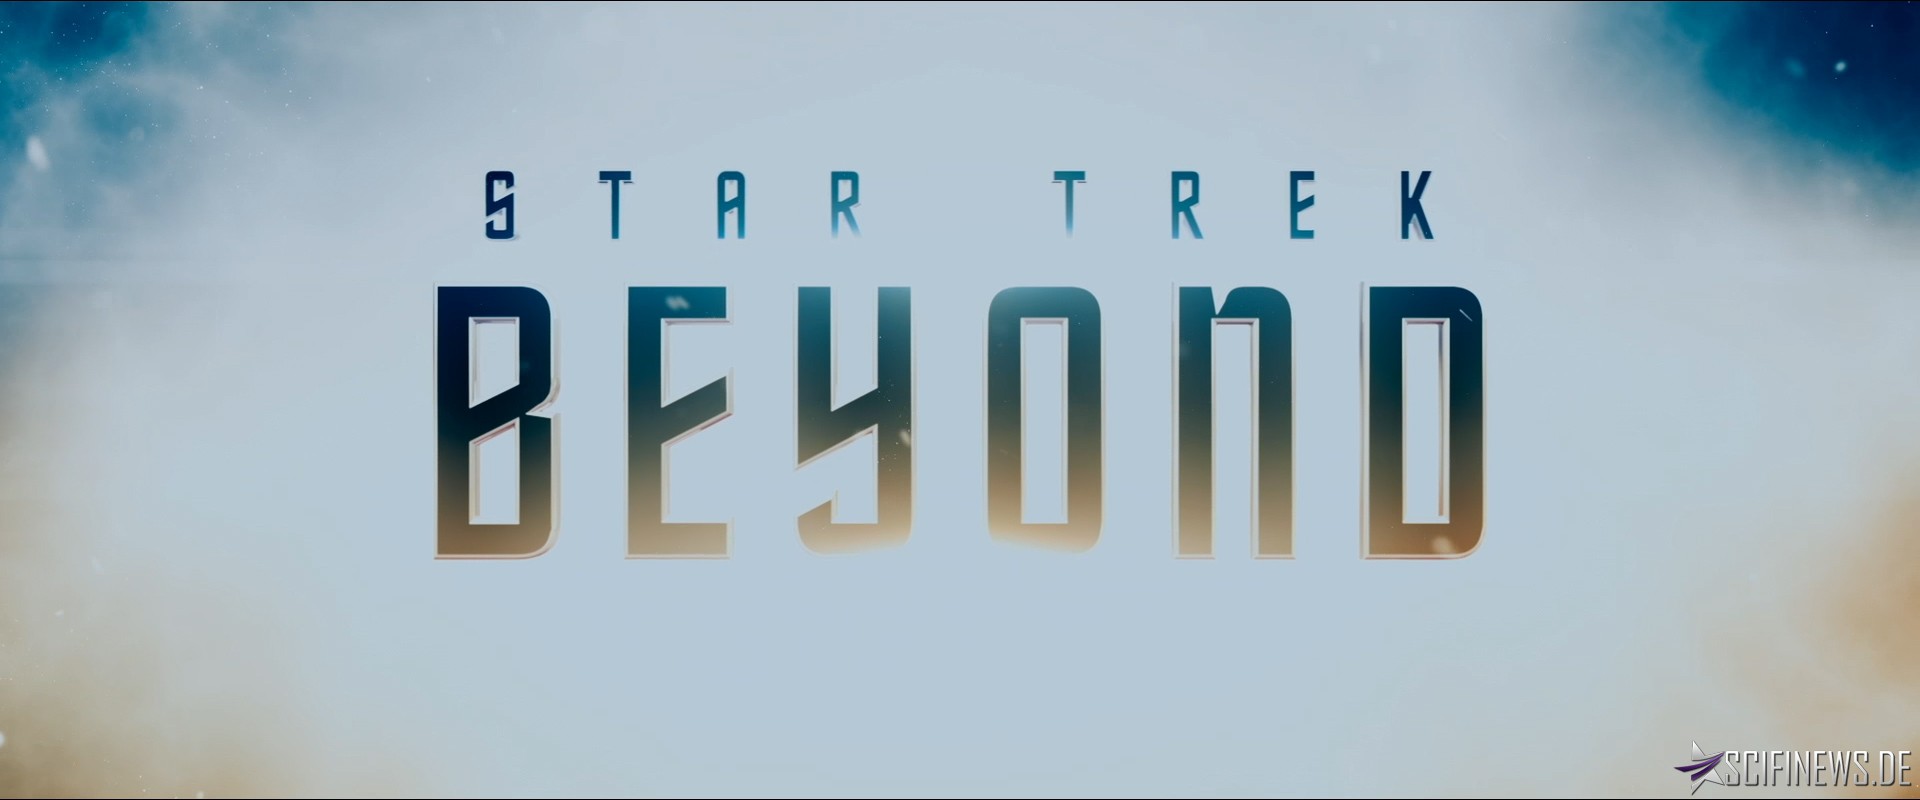 Star Trek Beyond - Logo